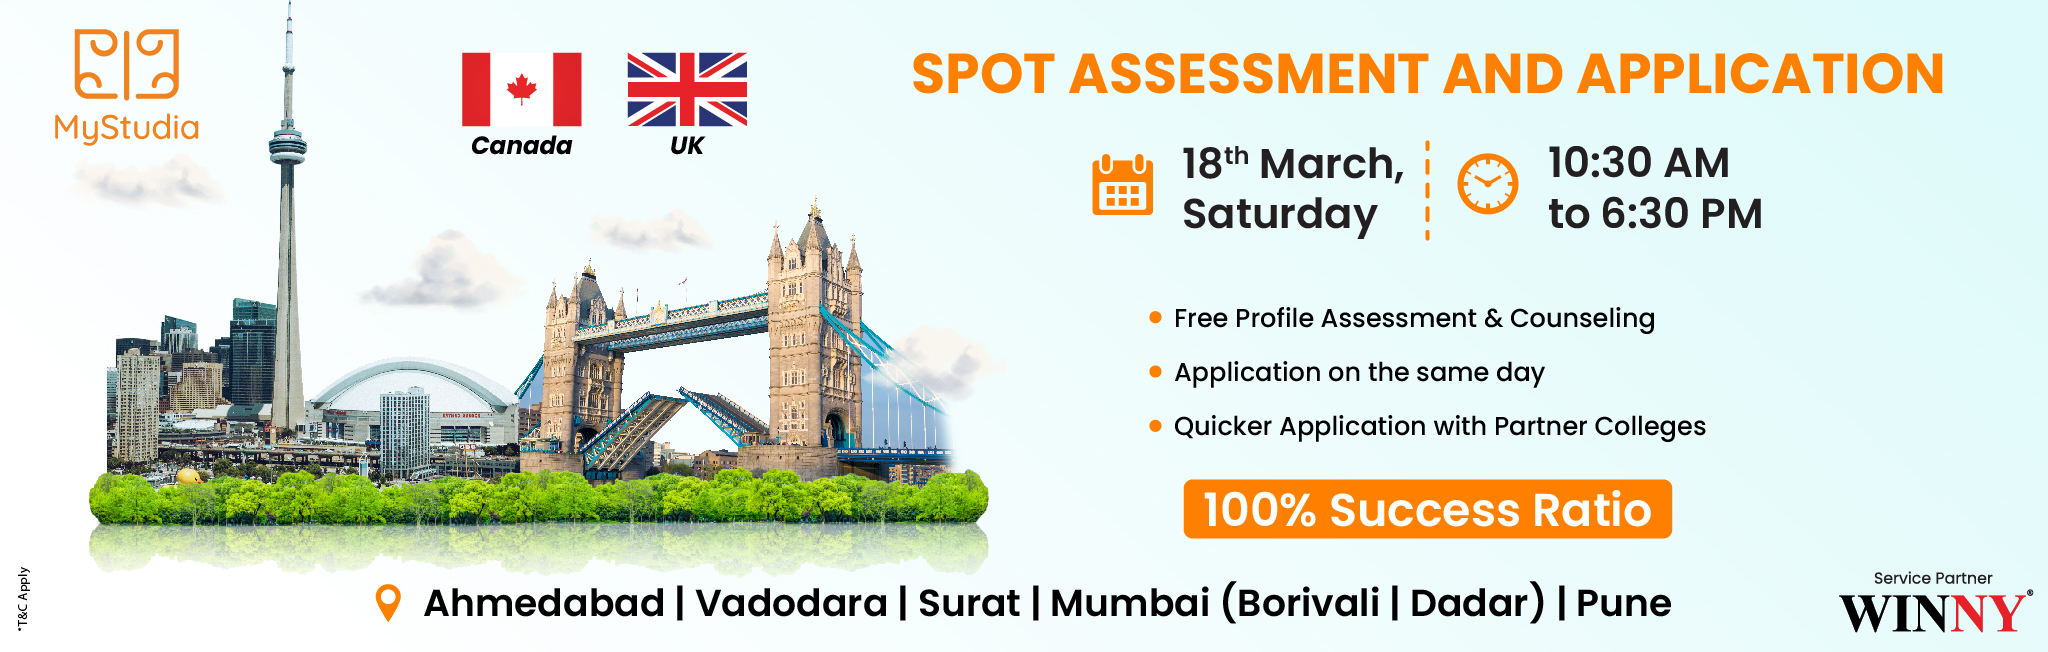 Study Abroad Seminar for Canada and UK at Surat, Surat, Gujarat, India